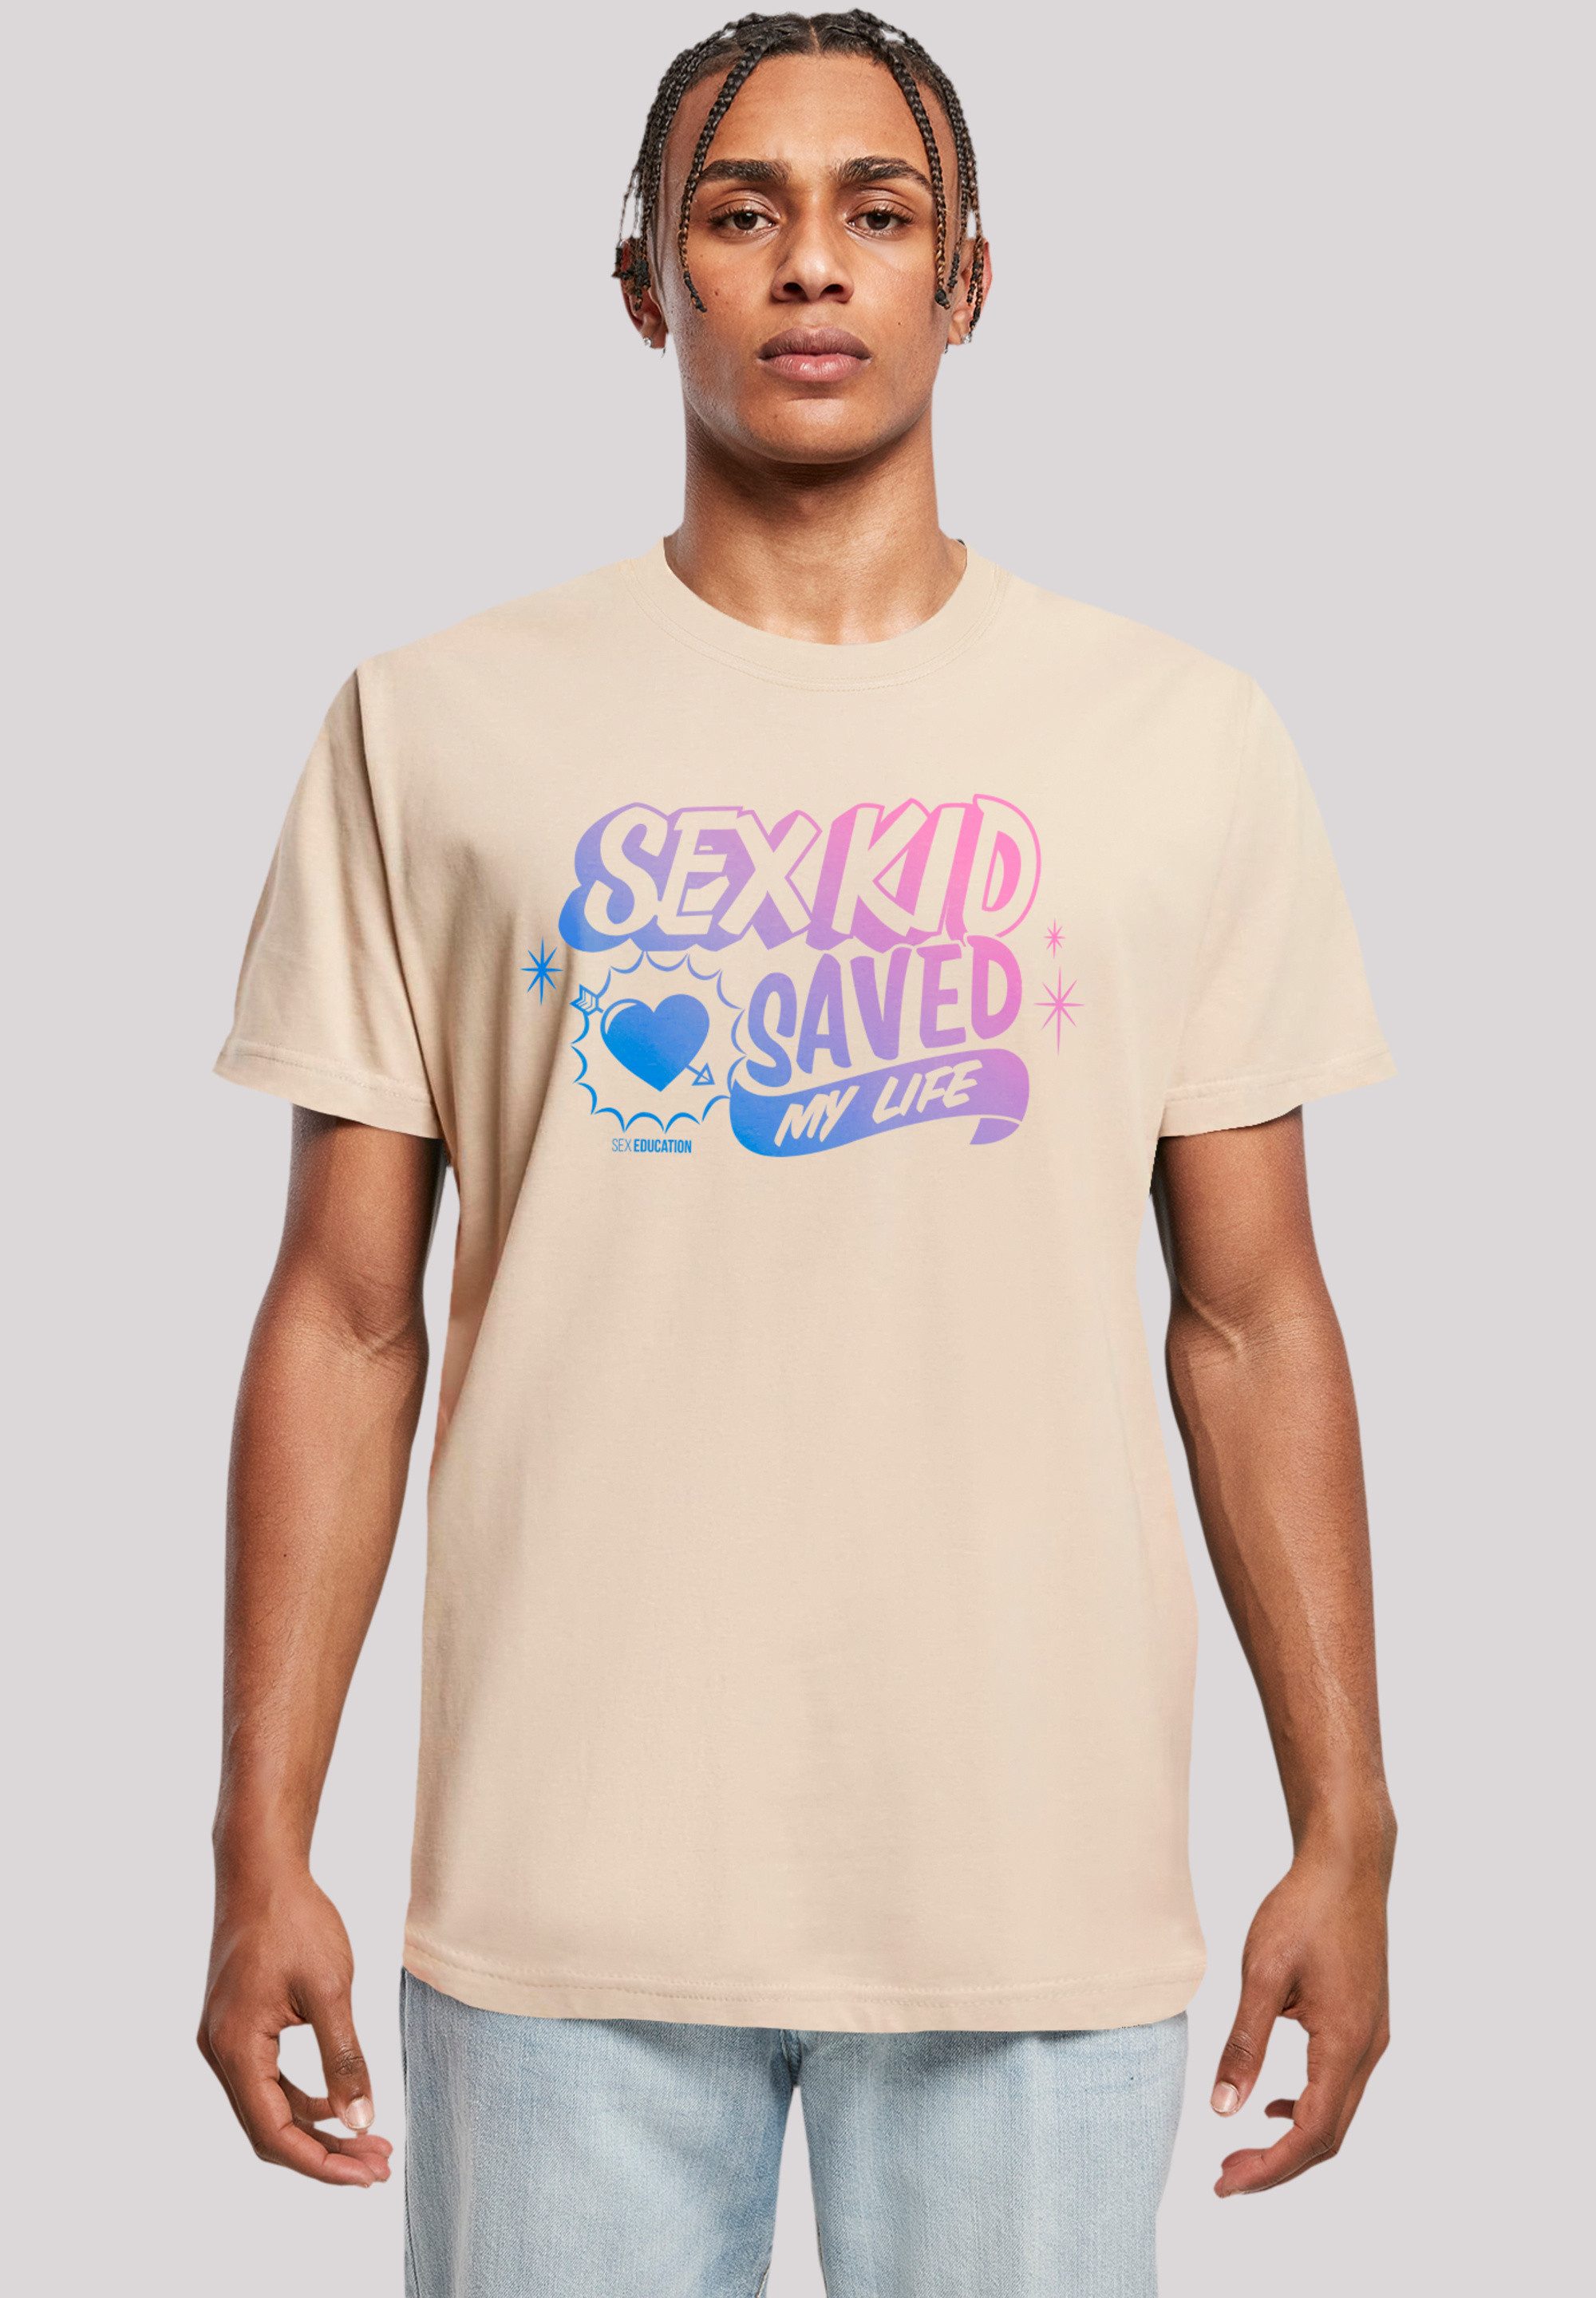 F4NT4STIC T-Shirt Sex Education Sex Kid Blend Netflix TV Series Premium Qualität